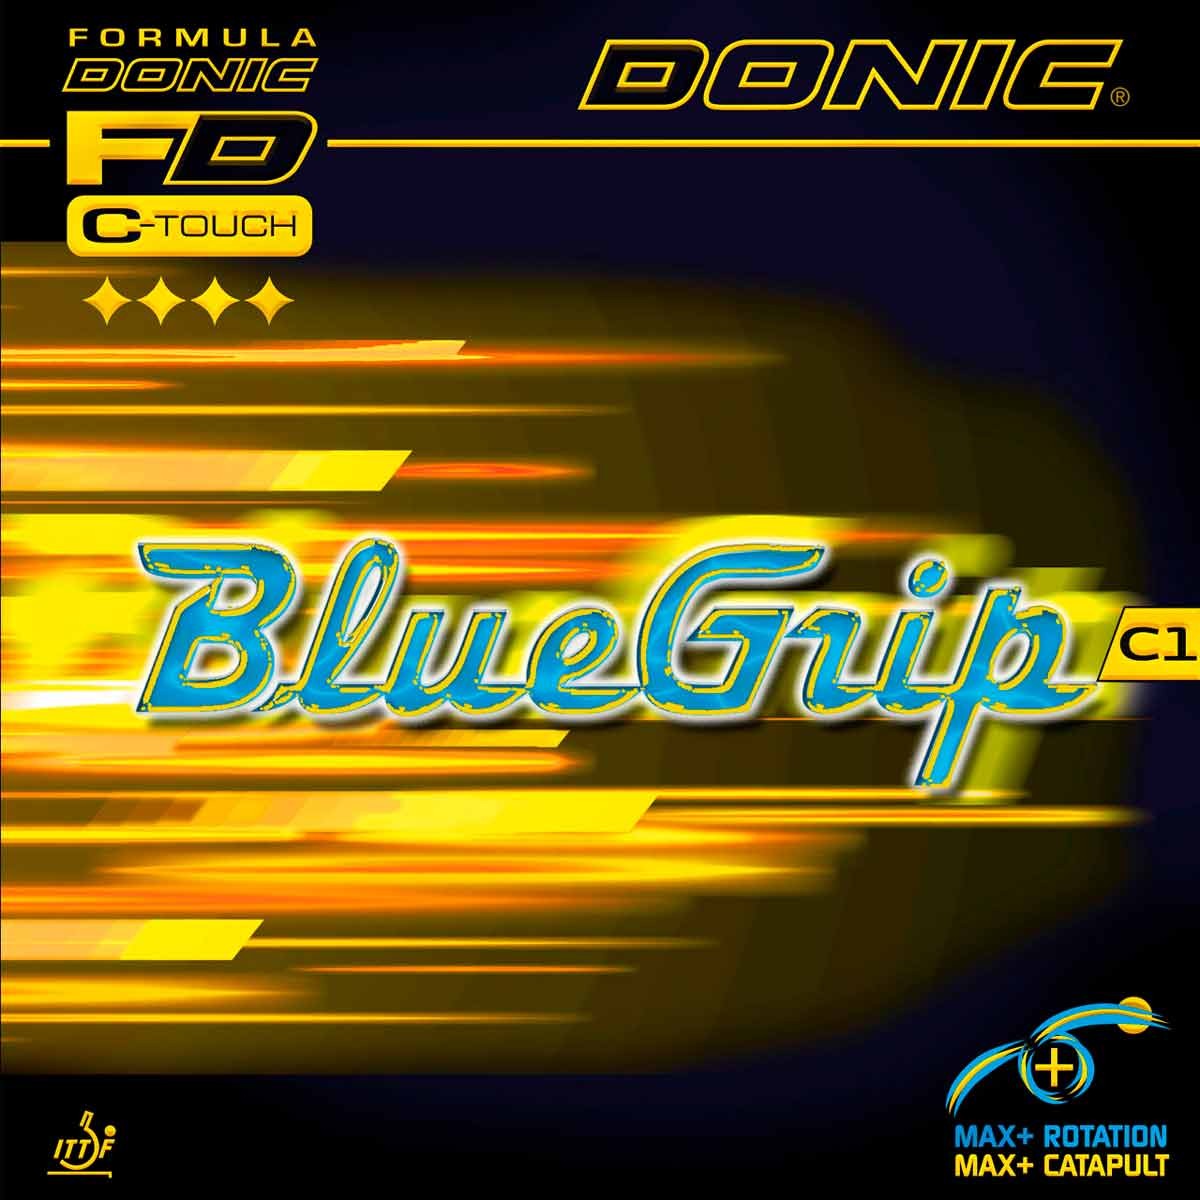 Donic Blauer Griff C1